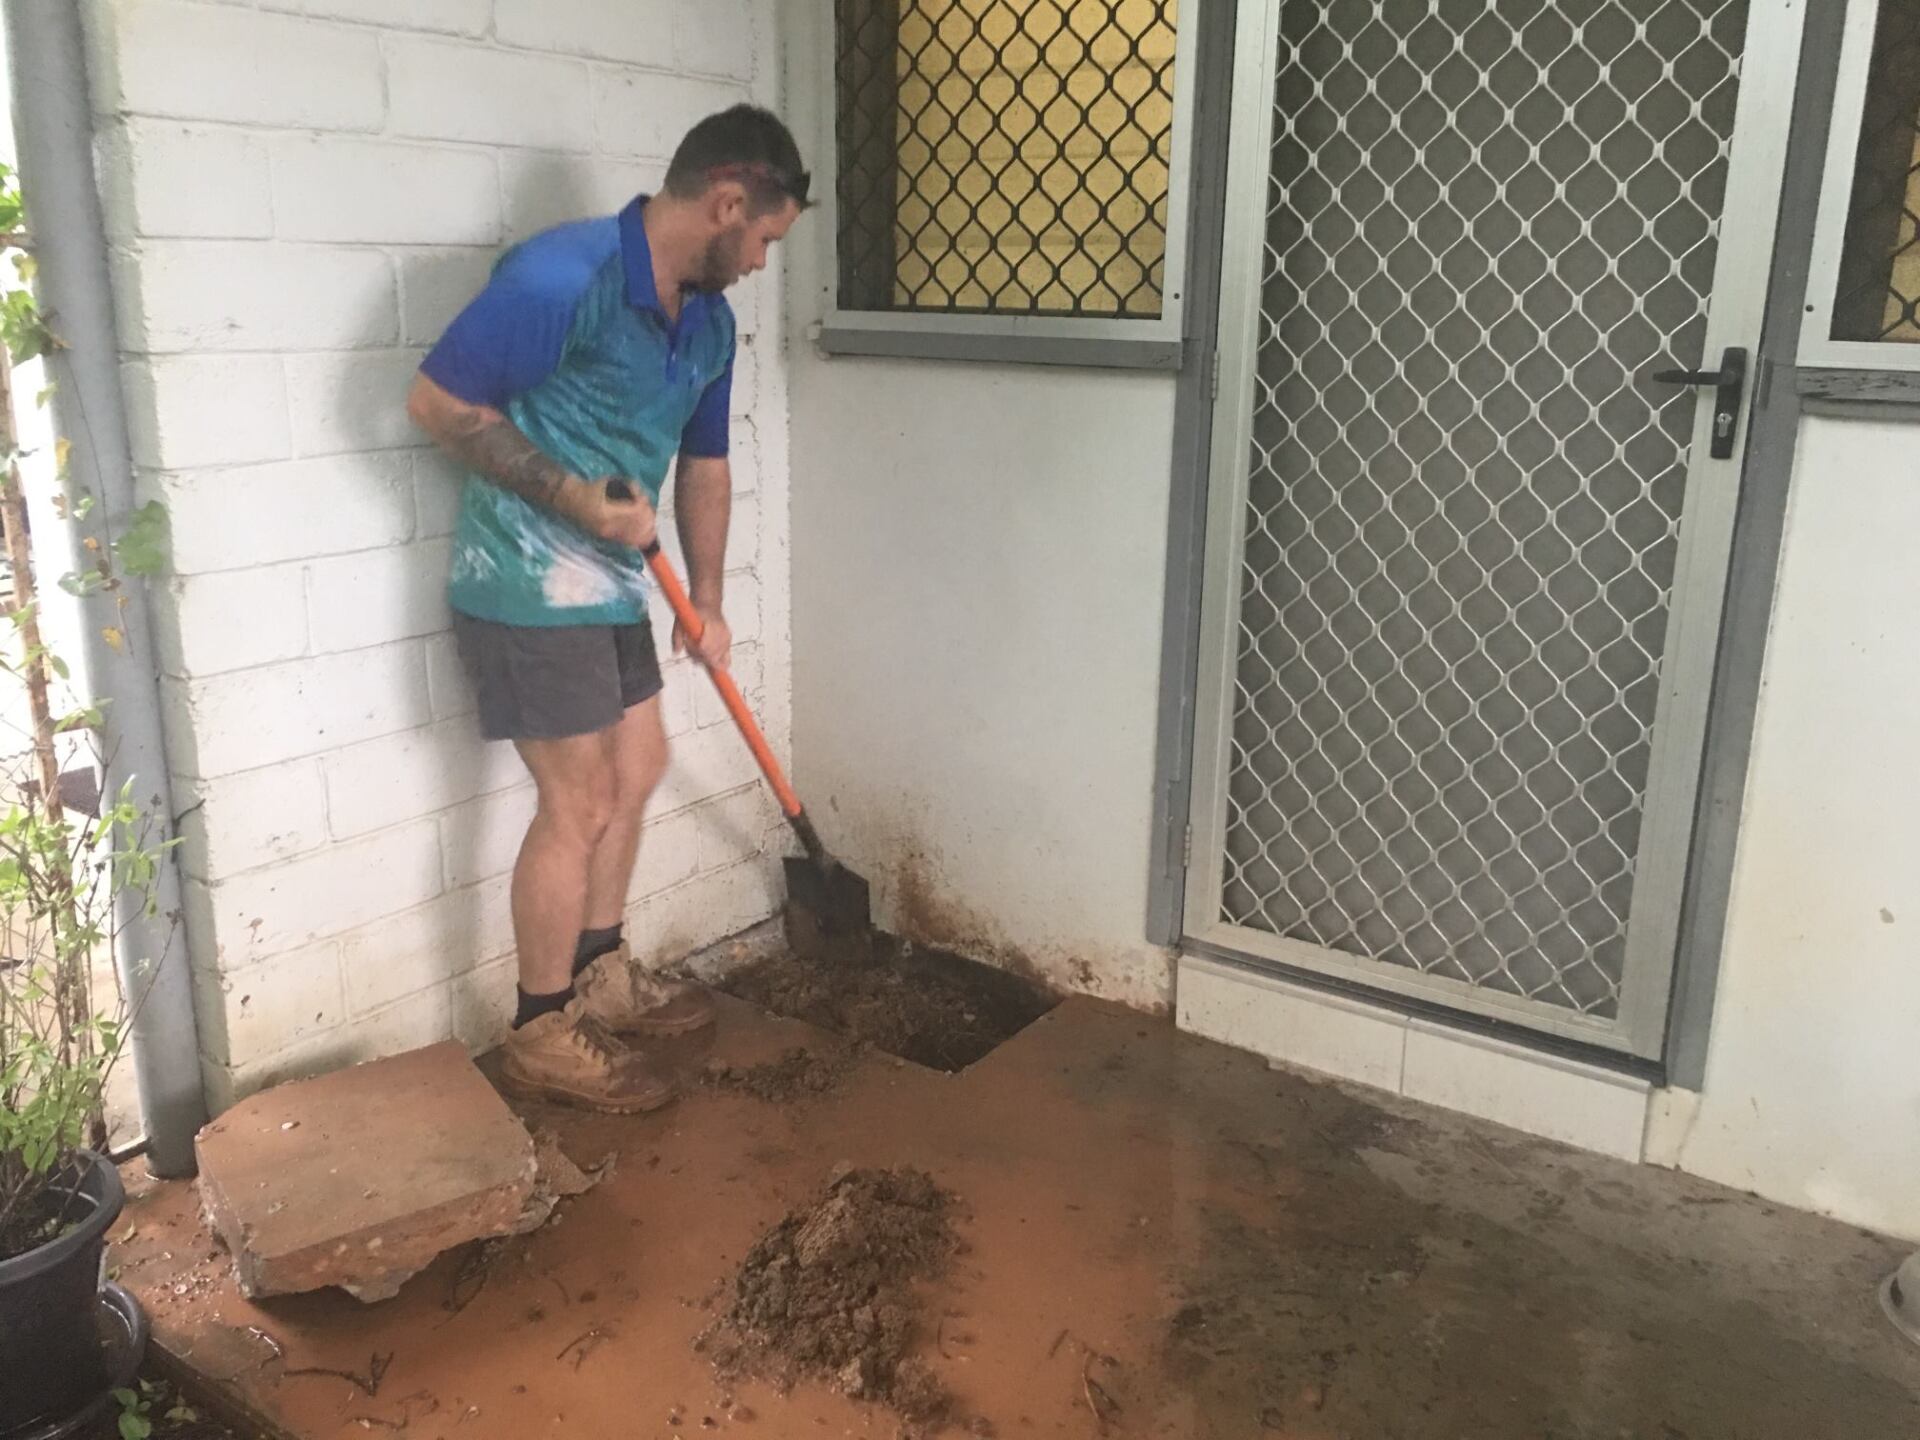 Plumber is checking for broken waterpipes under concrete slab - Darwin, NT